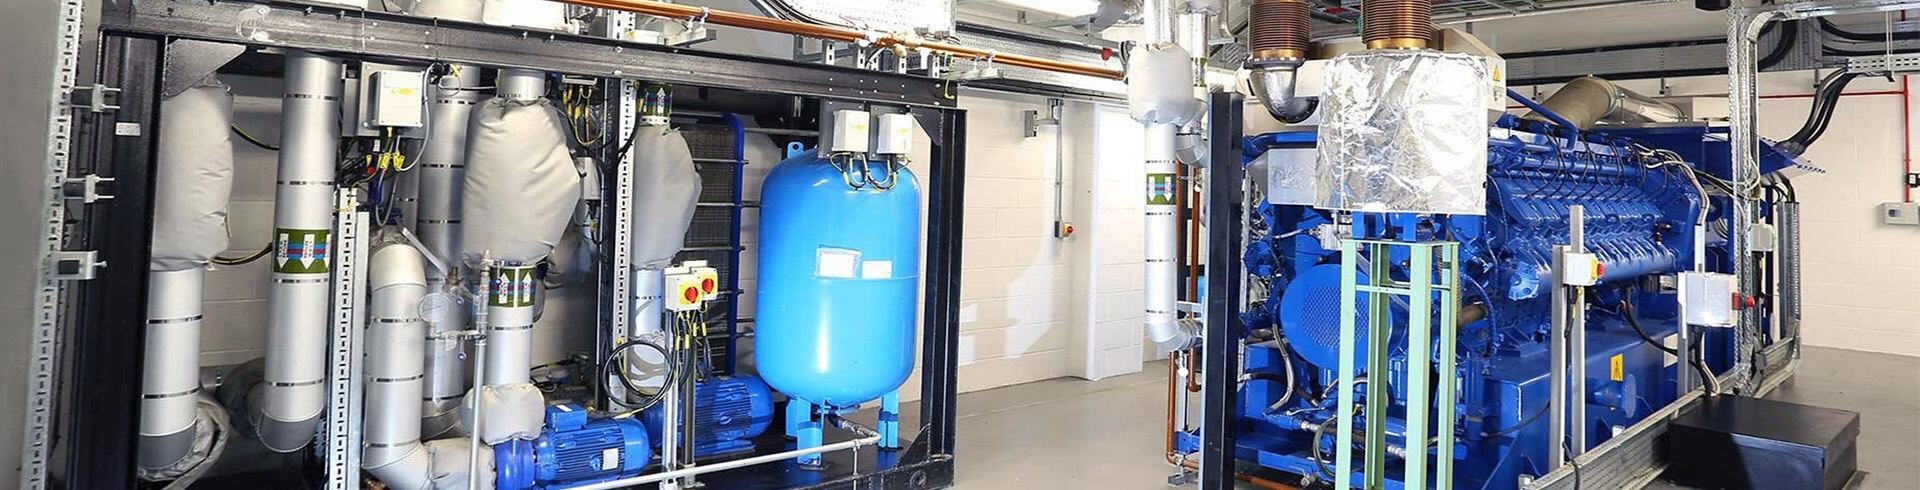 MWM 1000kW 1MW biogas generating set & CHP cogeneration ETTES POWER